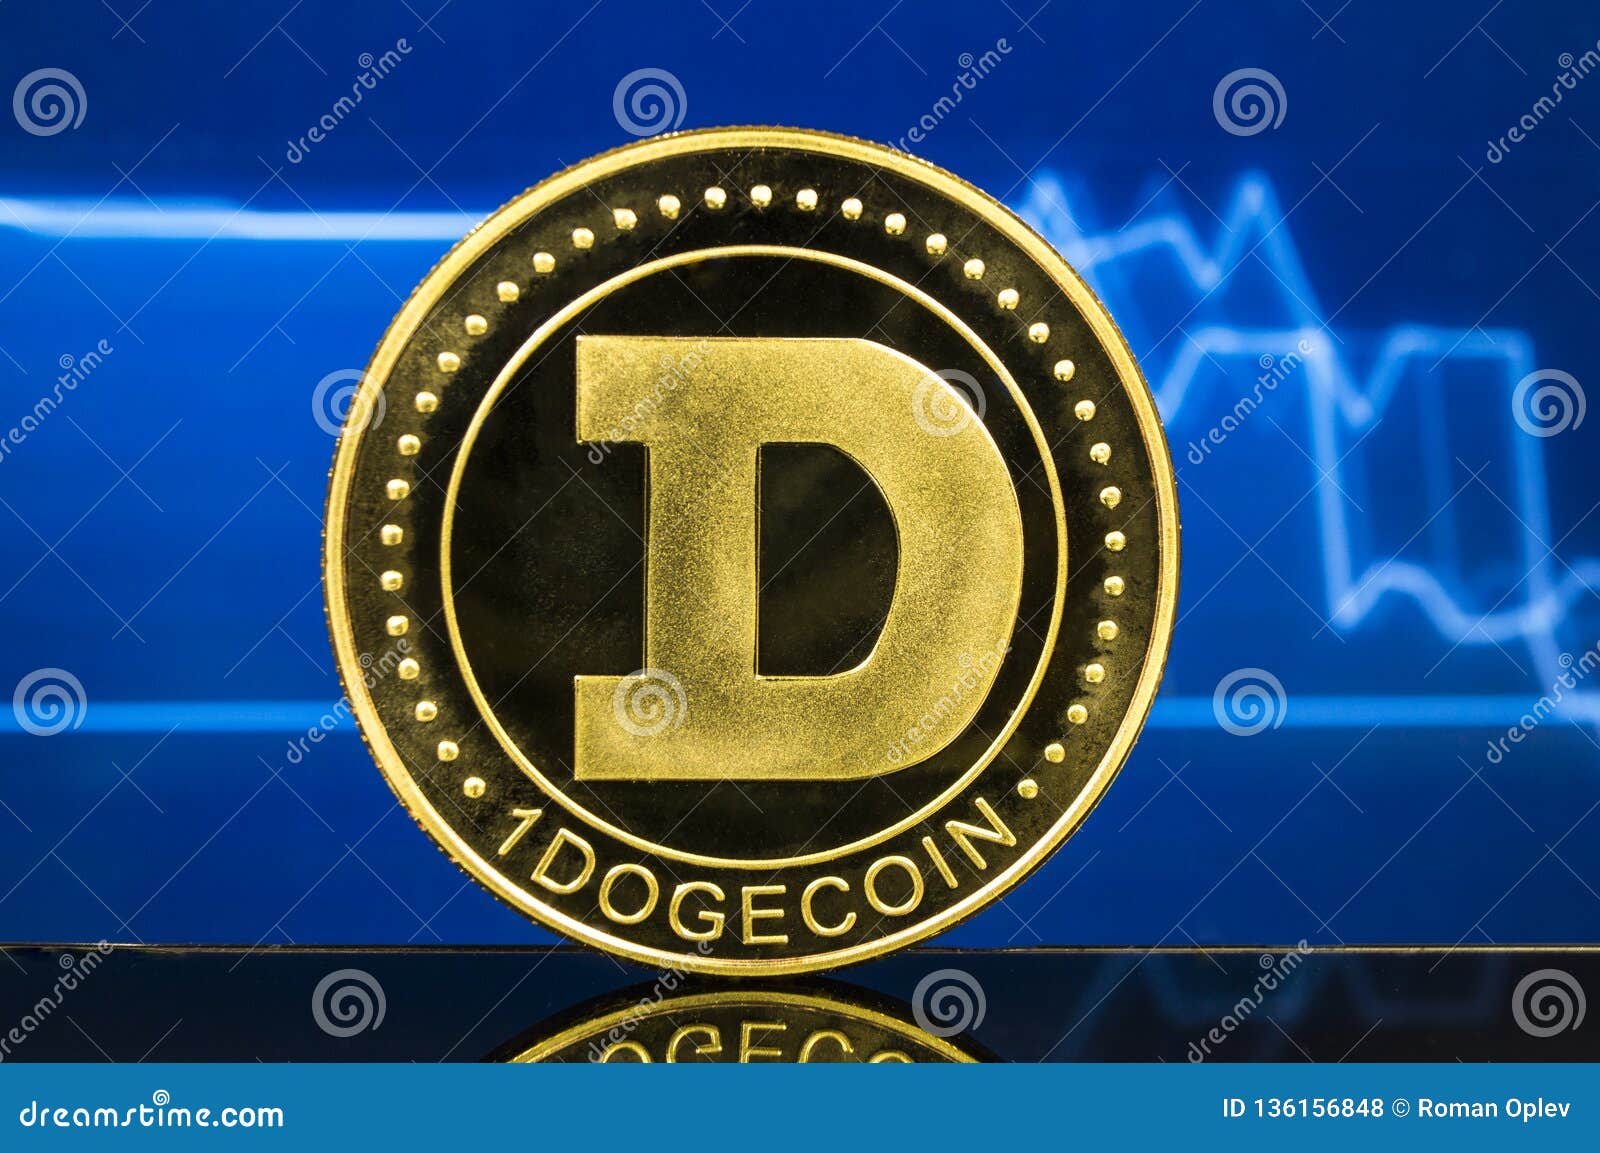 Dogecoin Stock Chart